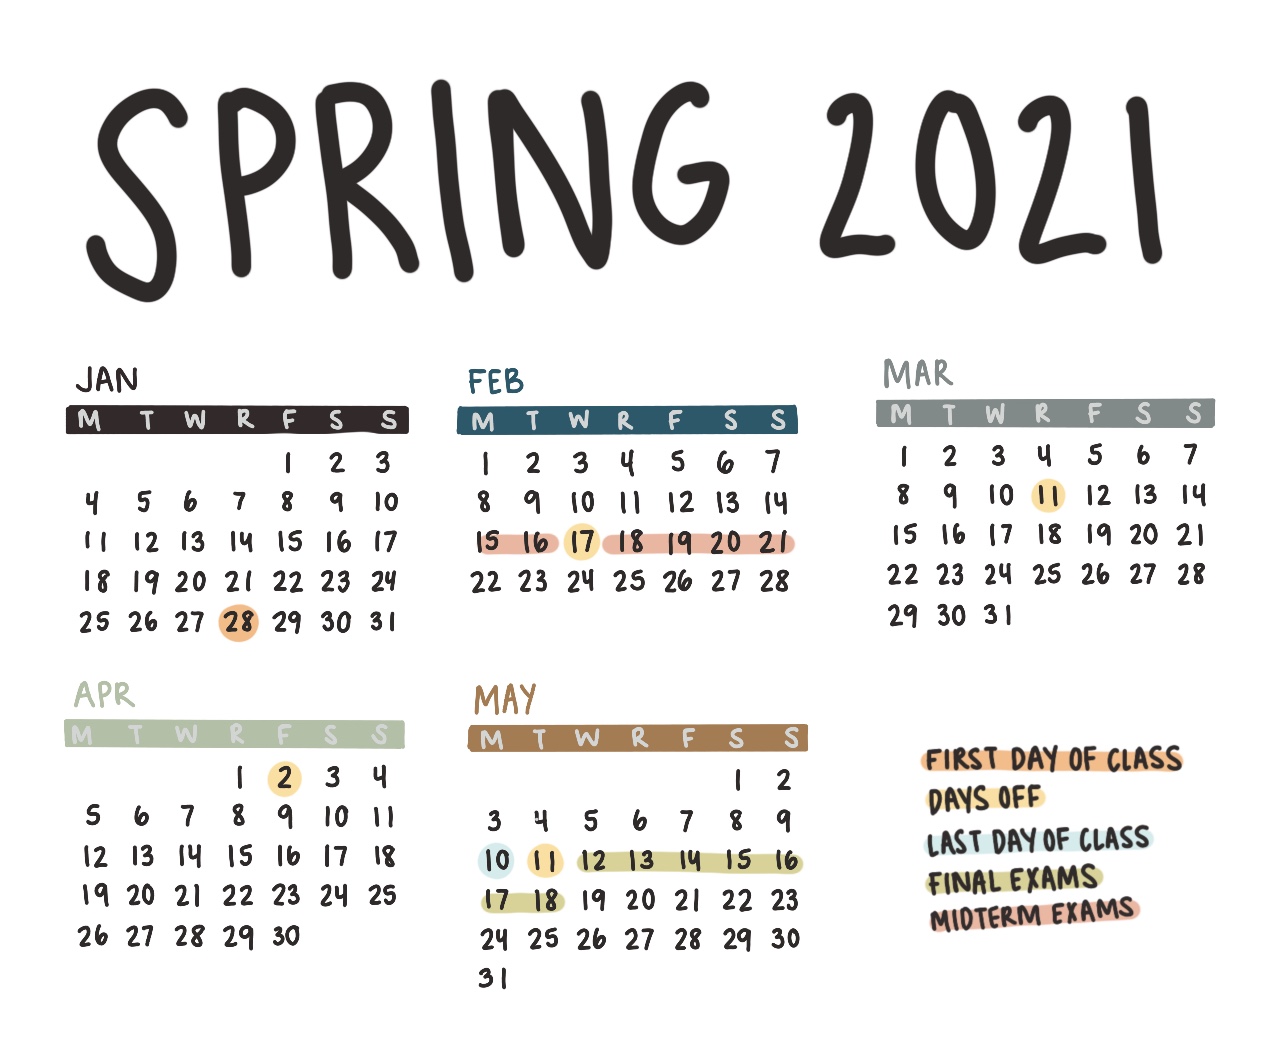 Provost Announces Spring 2021 Academic Calendar – The University News